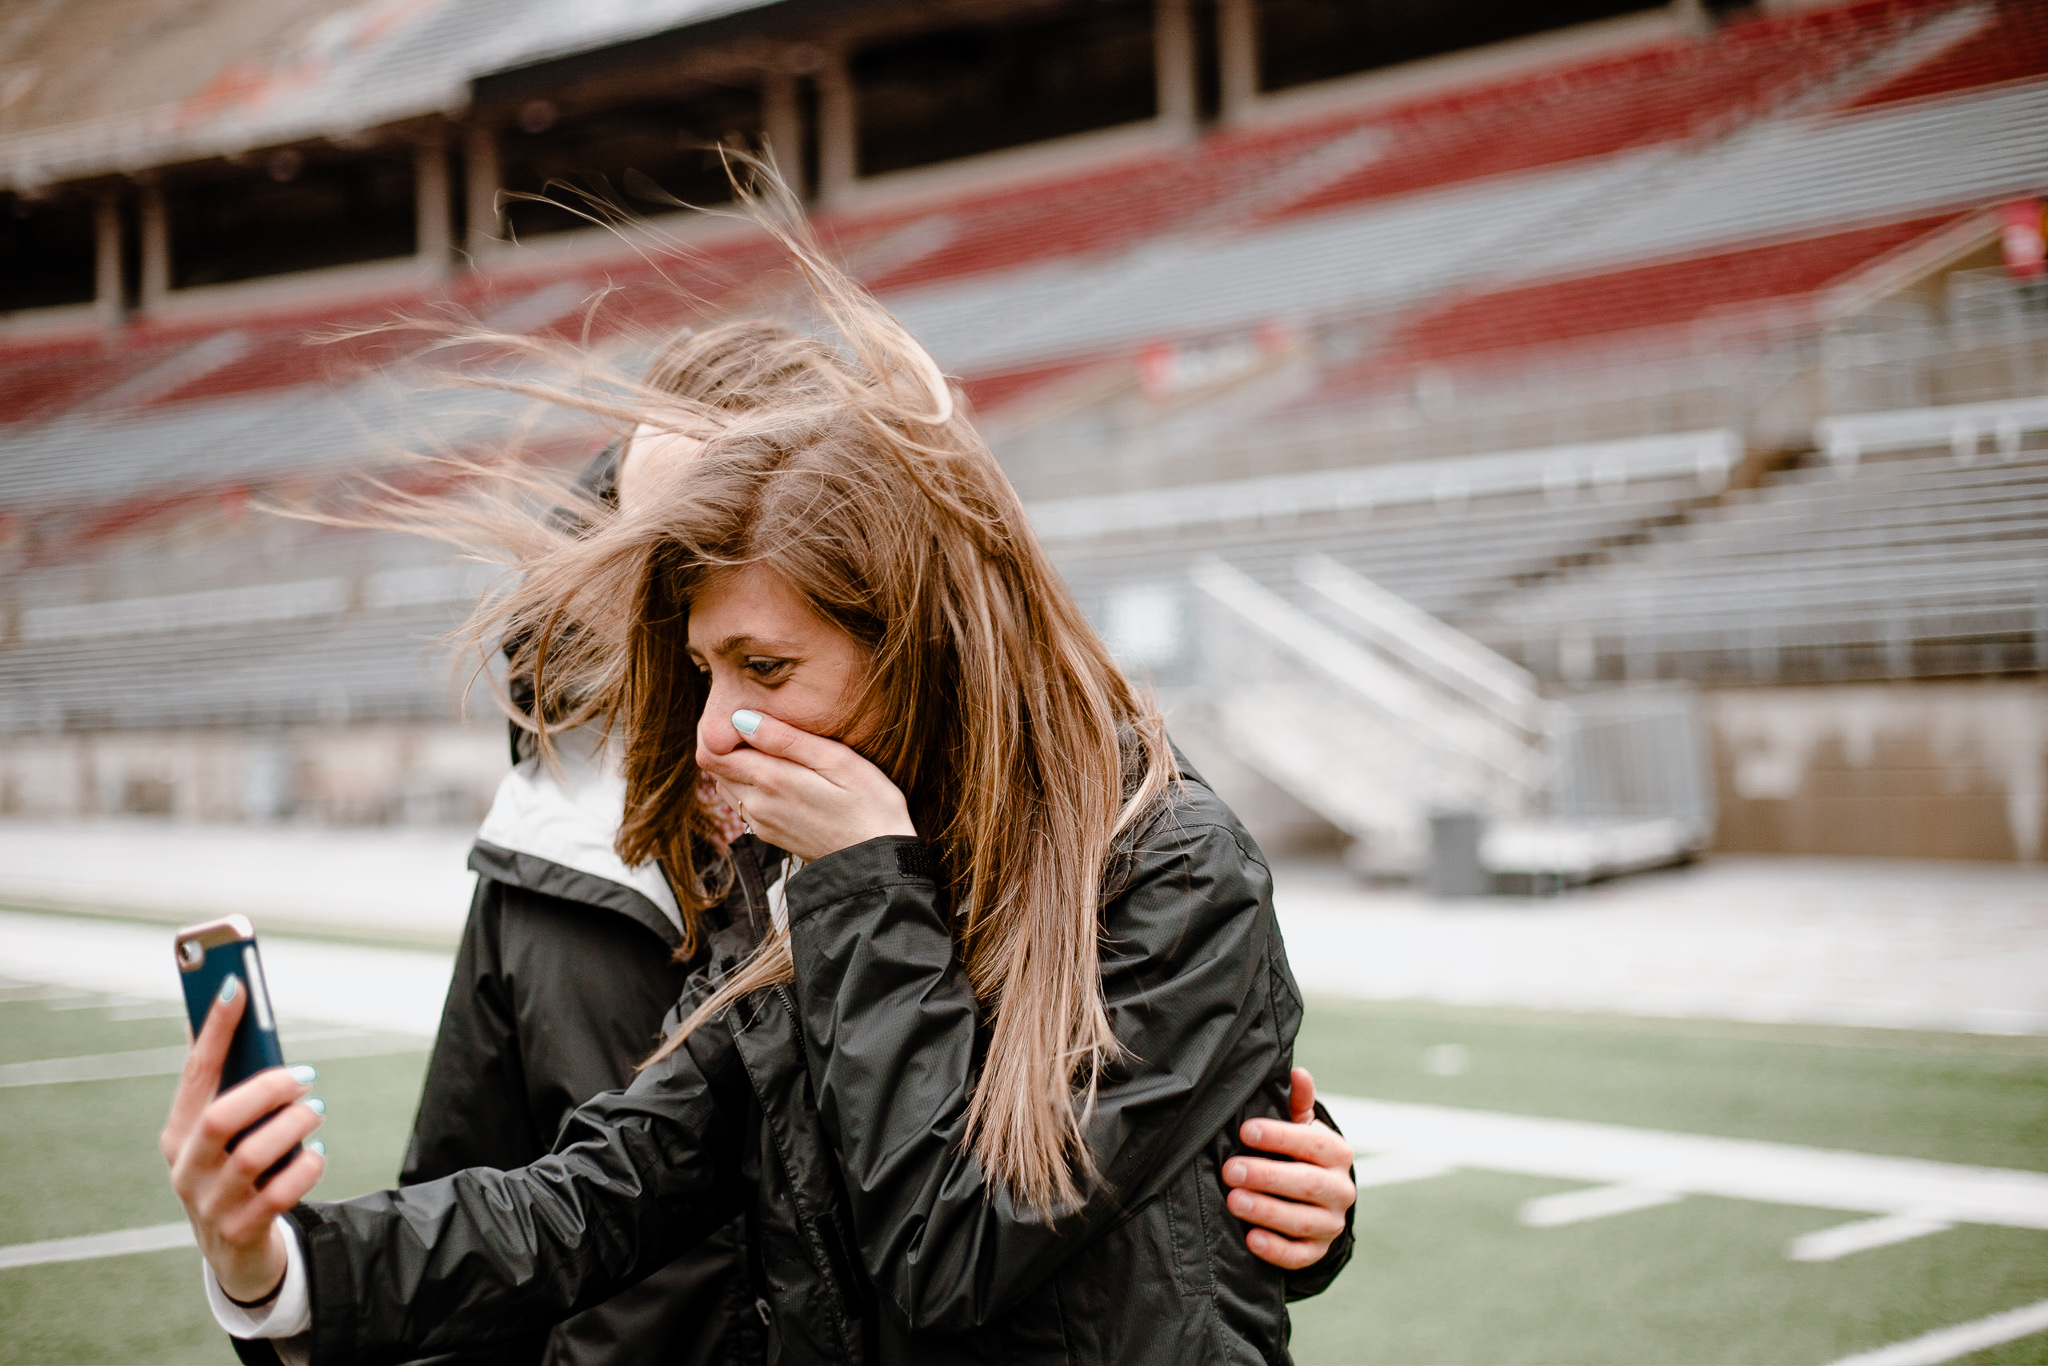 Jill + Cory | Ohio State Football Stadium Surprise Proposal | Catherine Milliron Photography | Ohio Wedding + Engagement Photographer